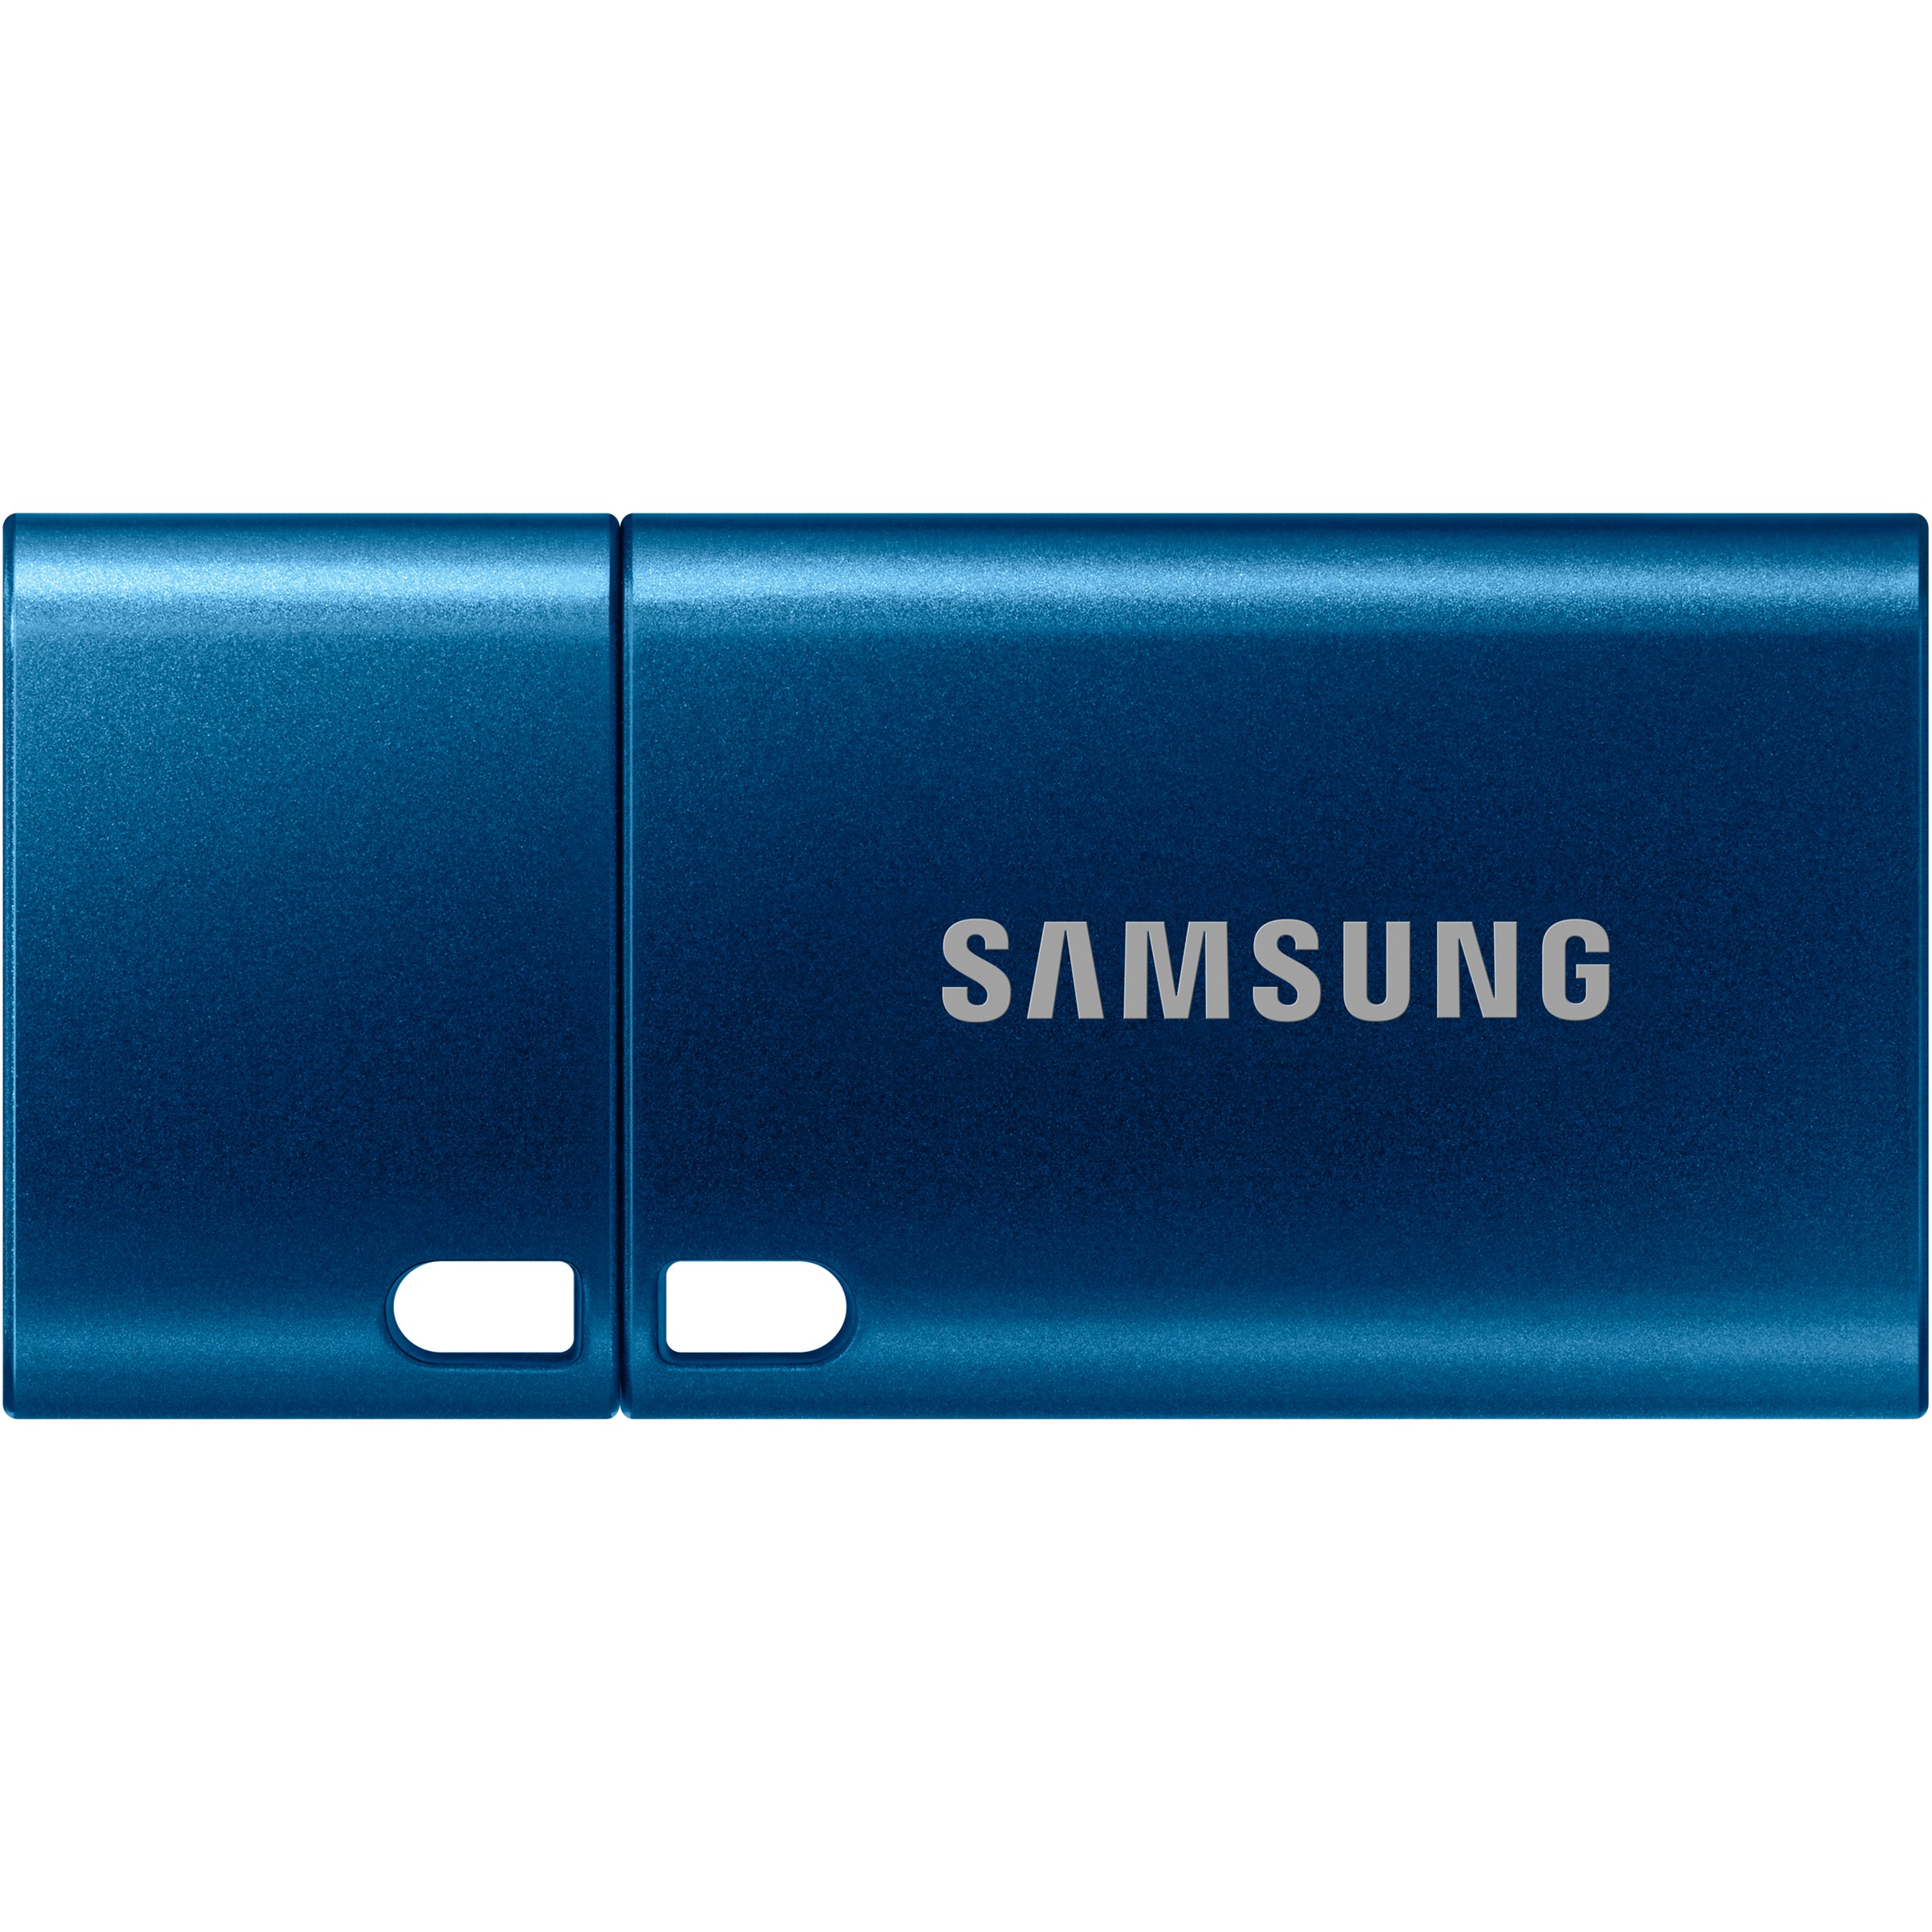 SAMSUNG MUF-256DA/APC, USB-Stick, Samsung MUF-256DA USB  (BILD1)